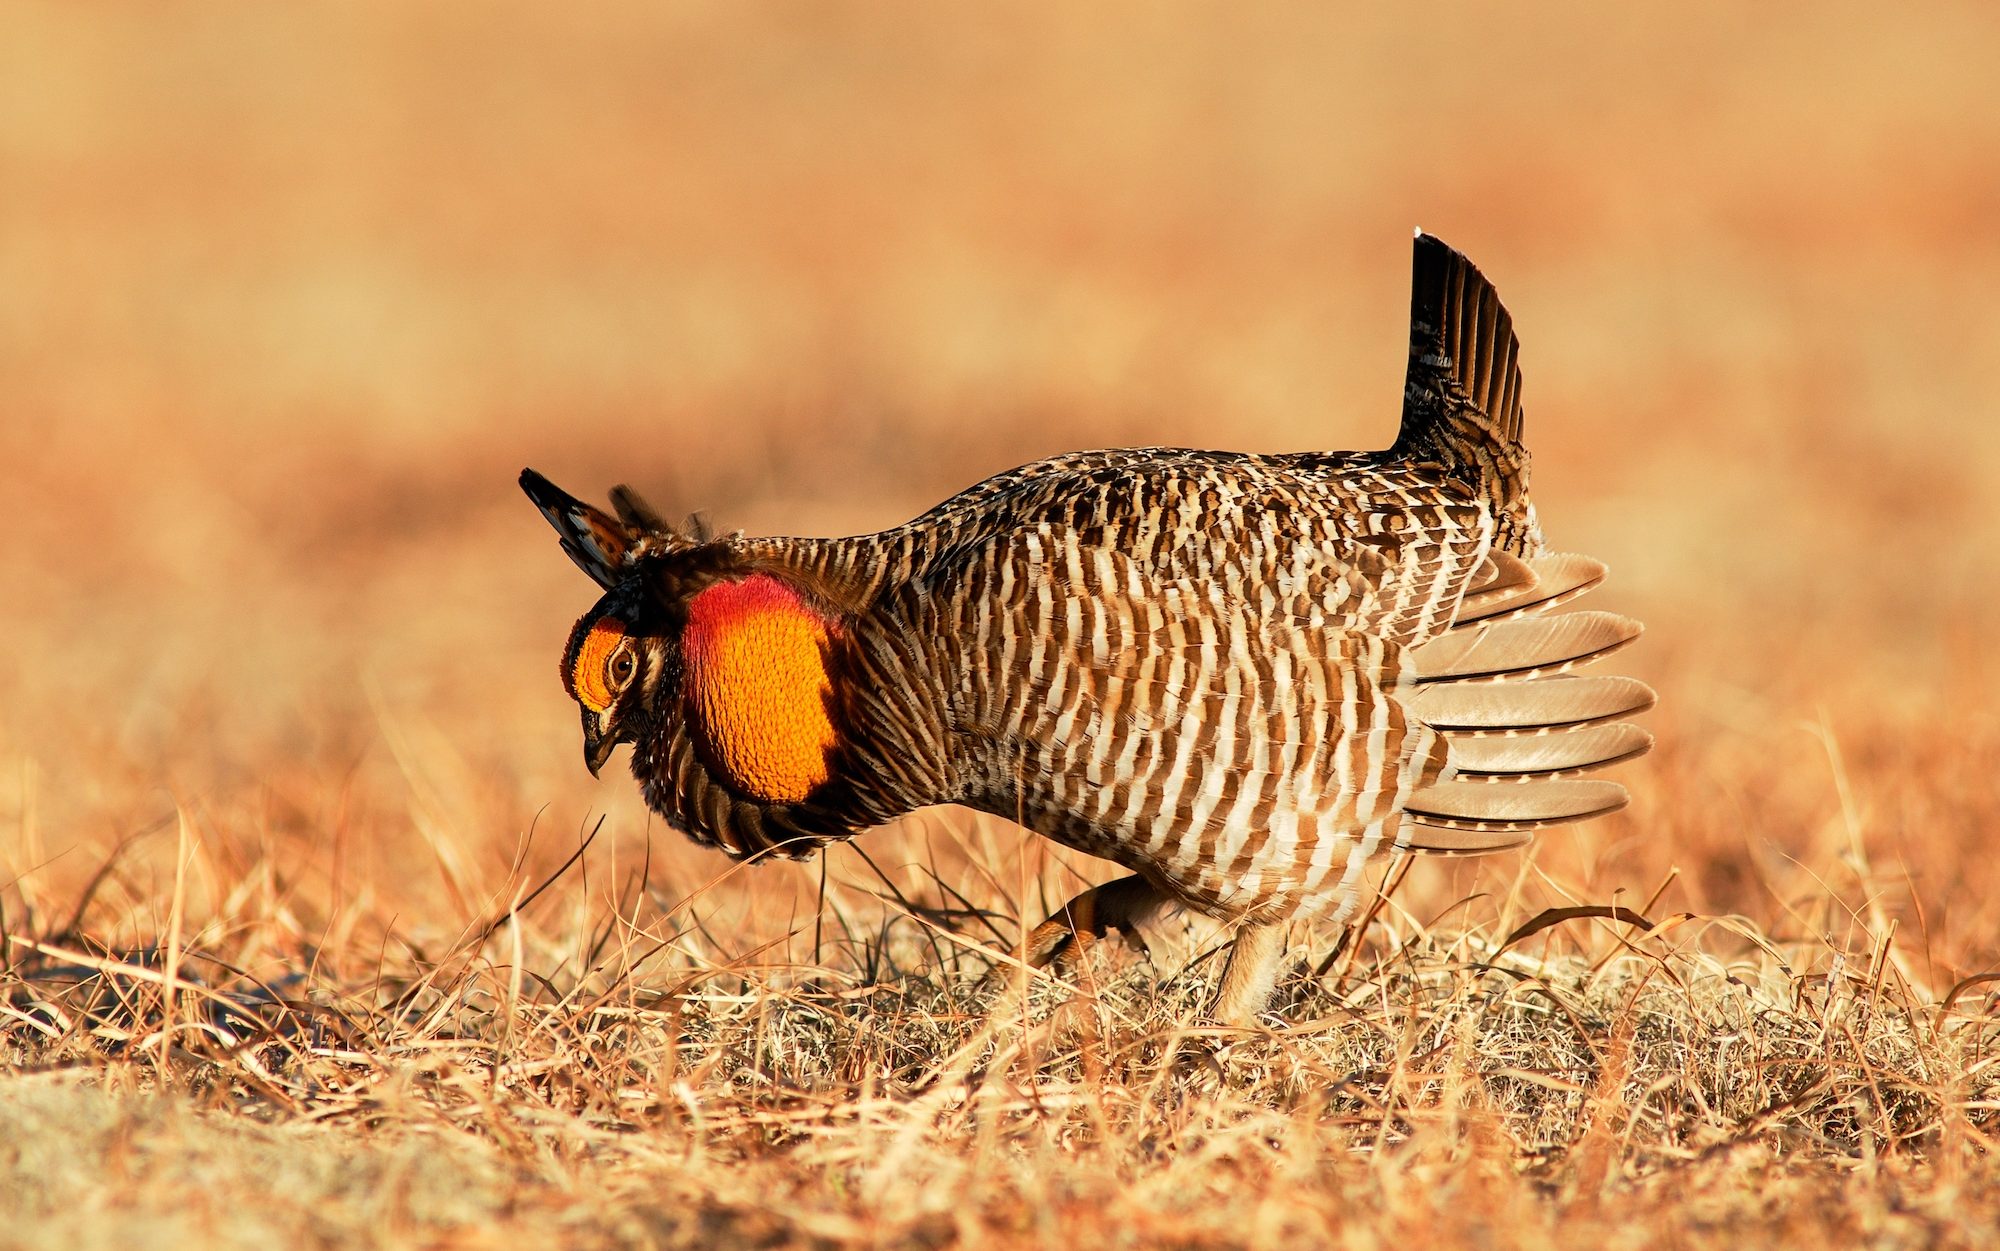 chicken-like bird with orange throat sacs running across the grassland